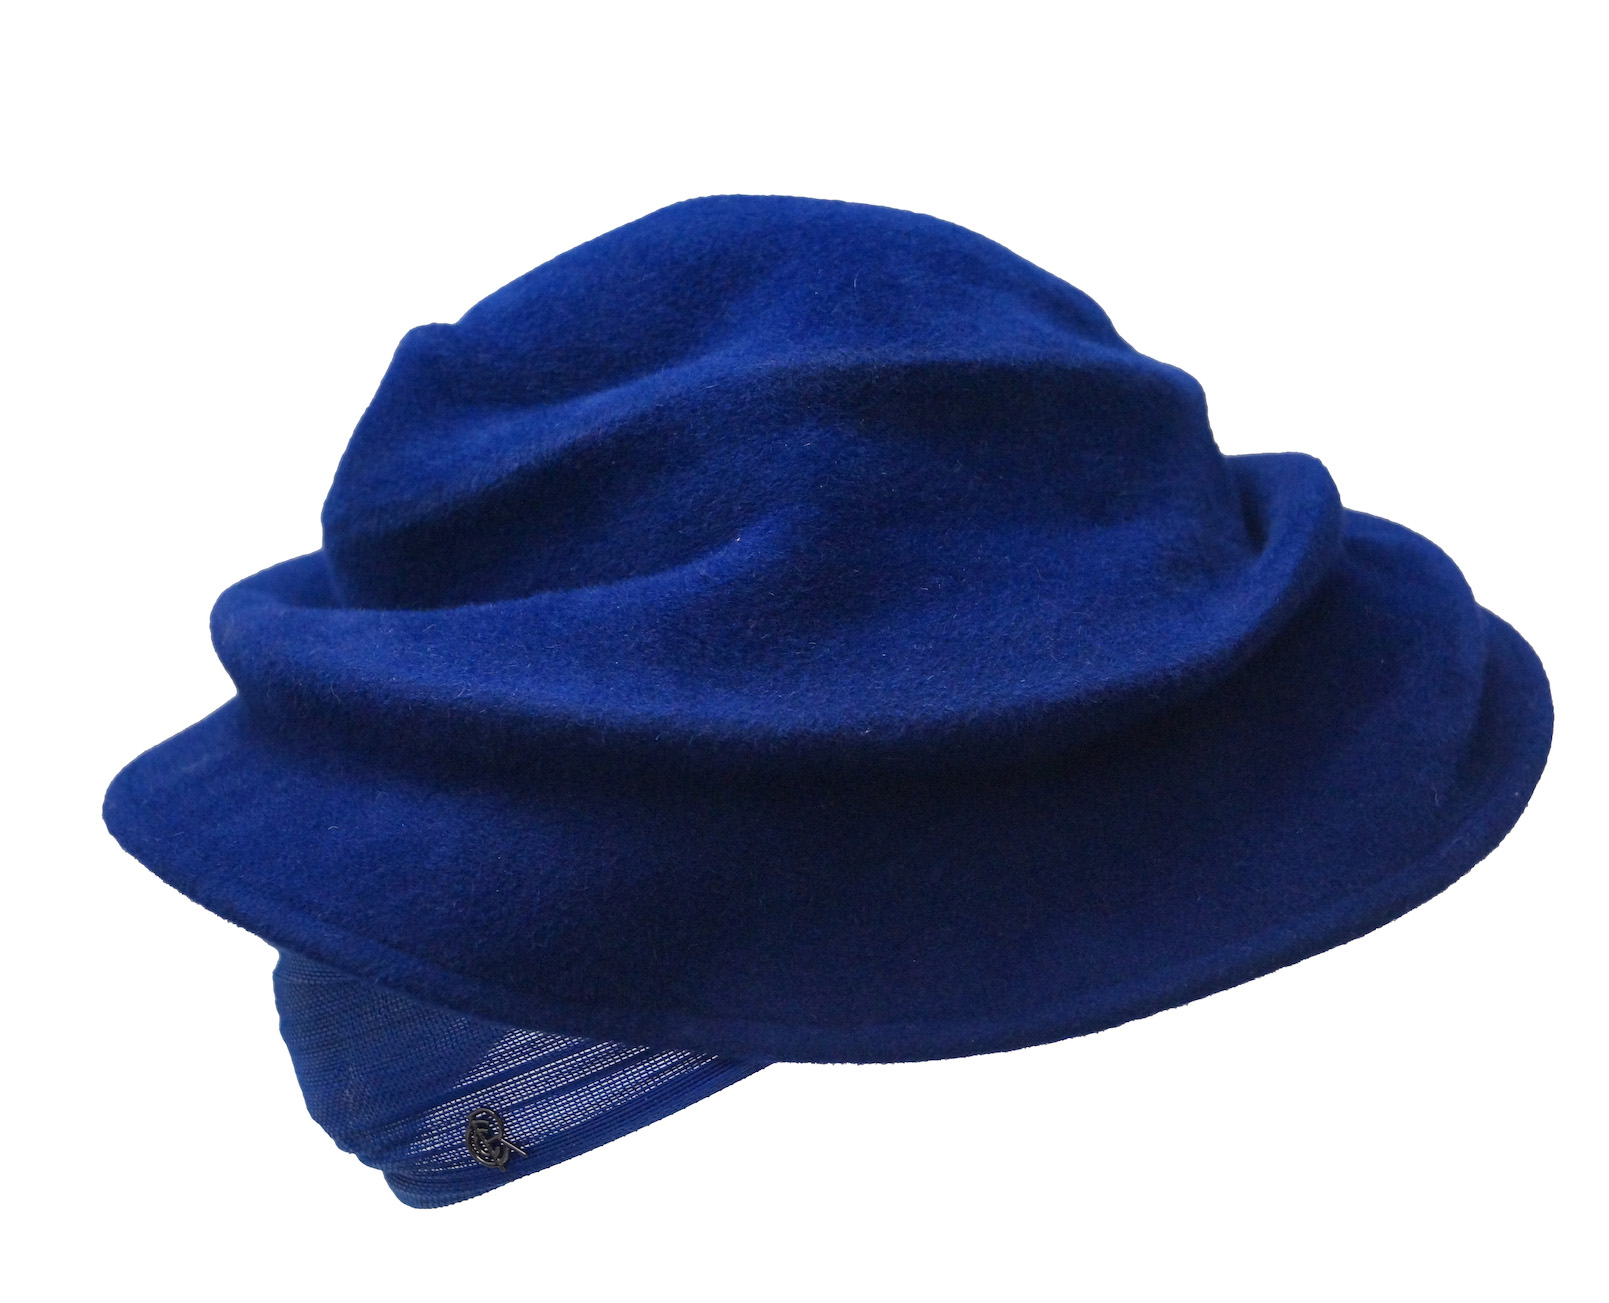 Celine Robert- Spitale-haarvilt en buntal turban - royal blue